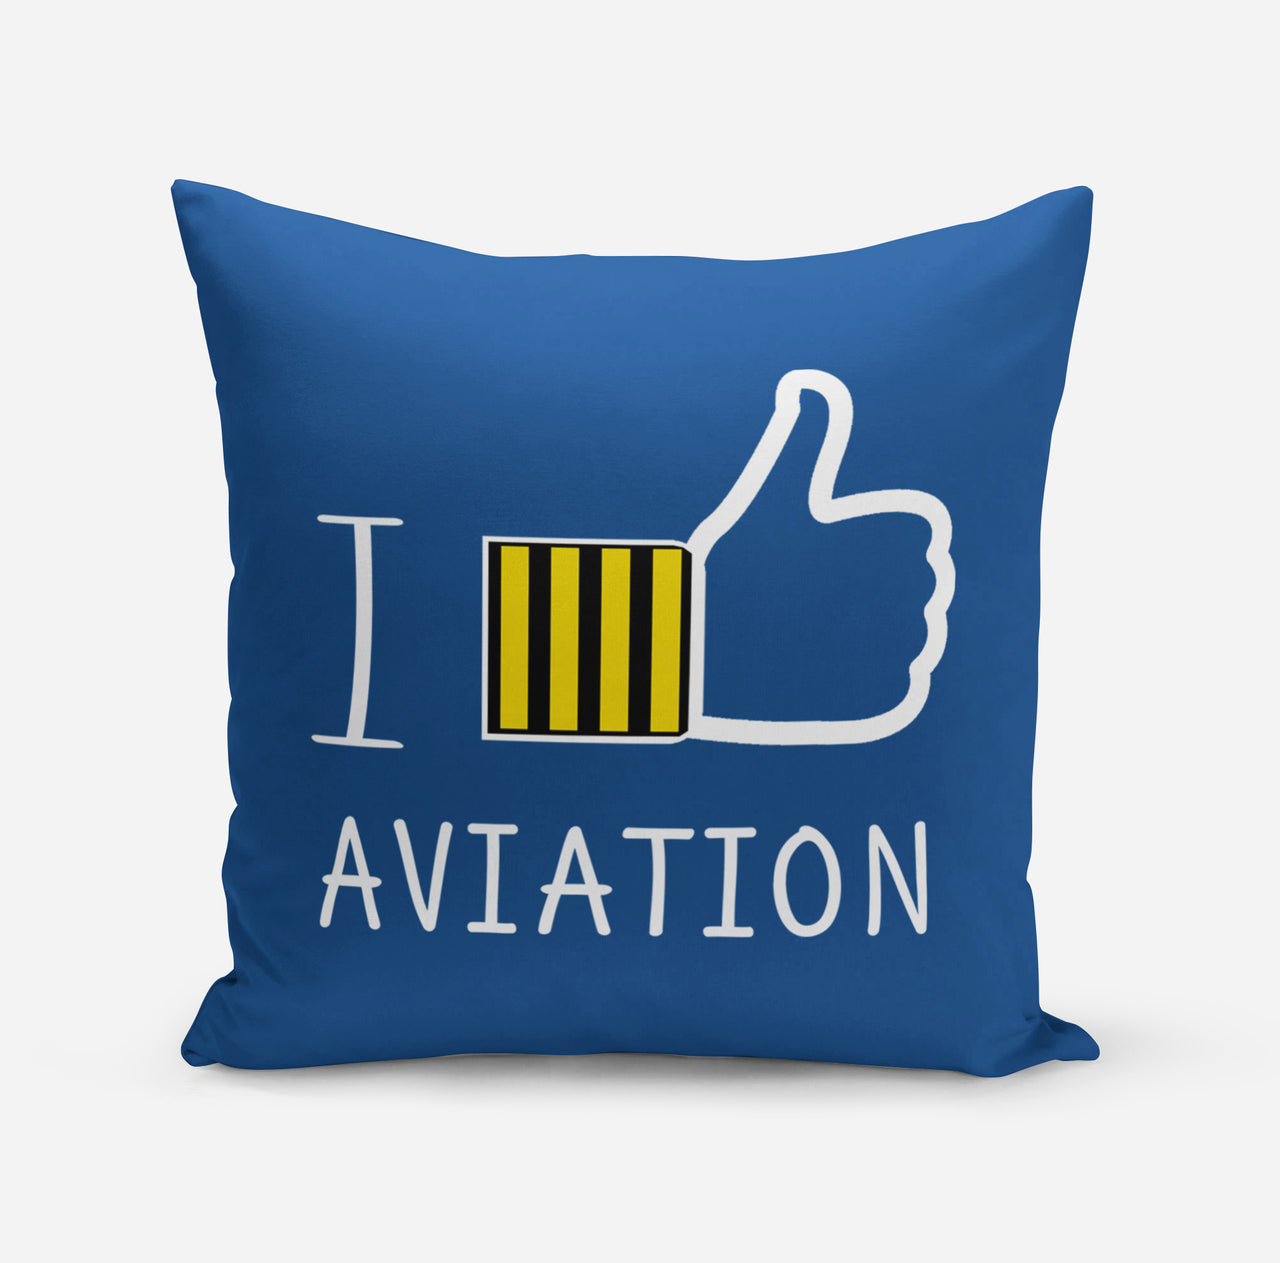 I Like Aviation Designed Pillows